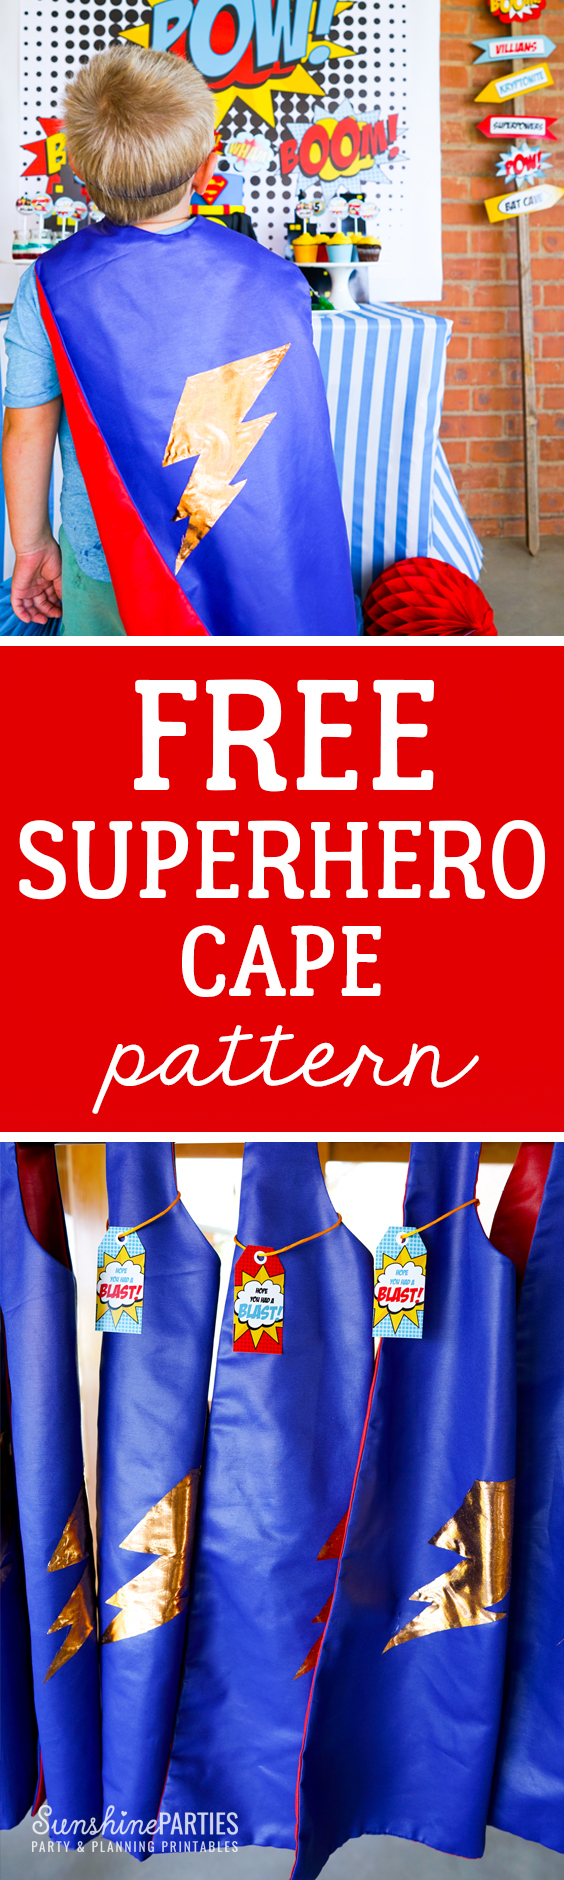 Free Superhero Cape Pattern